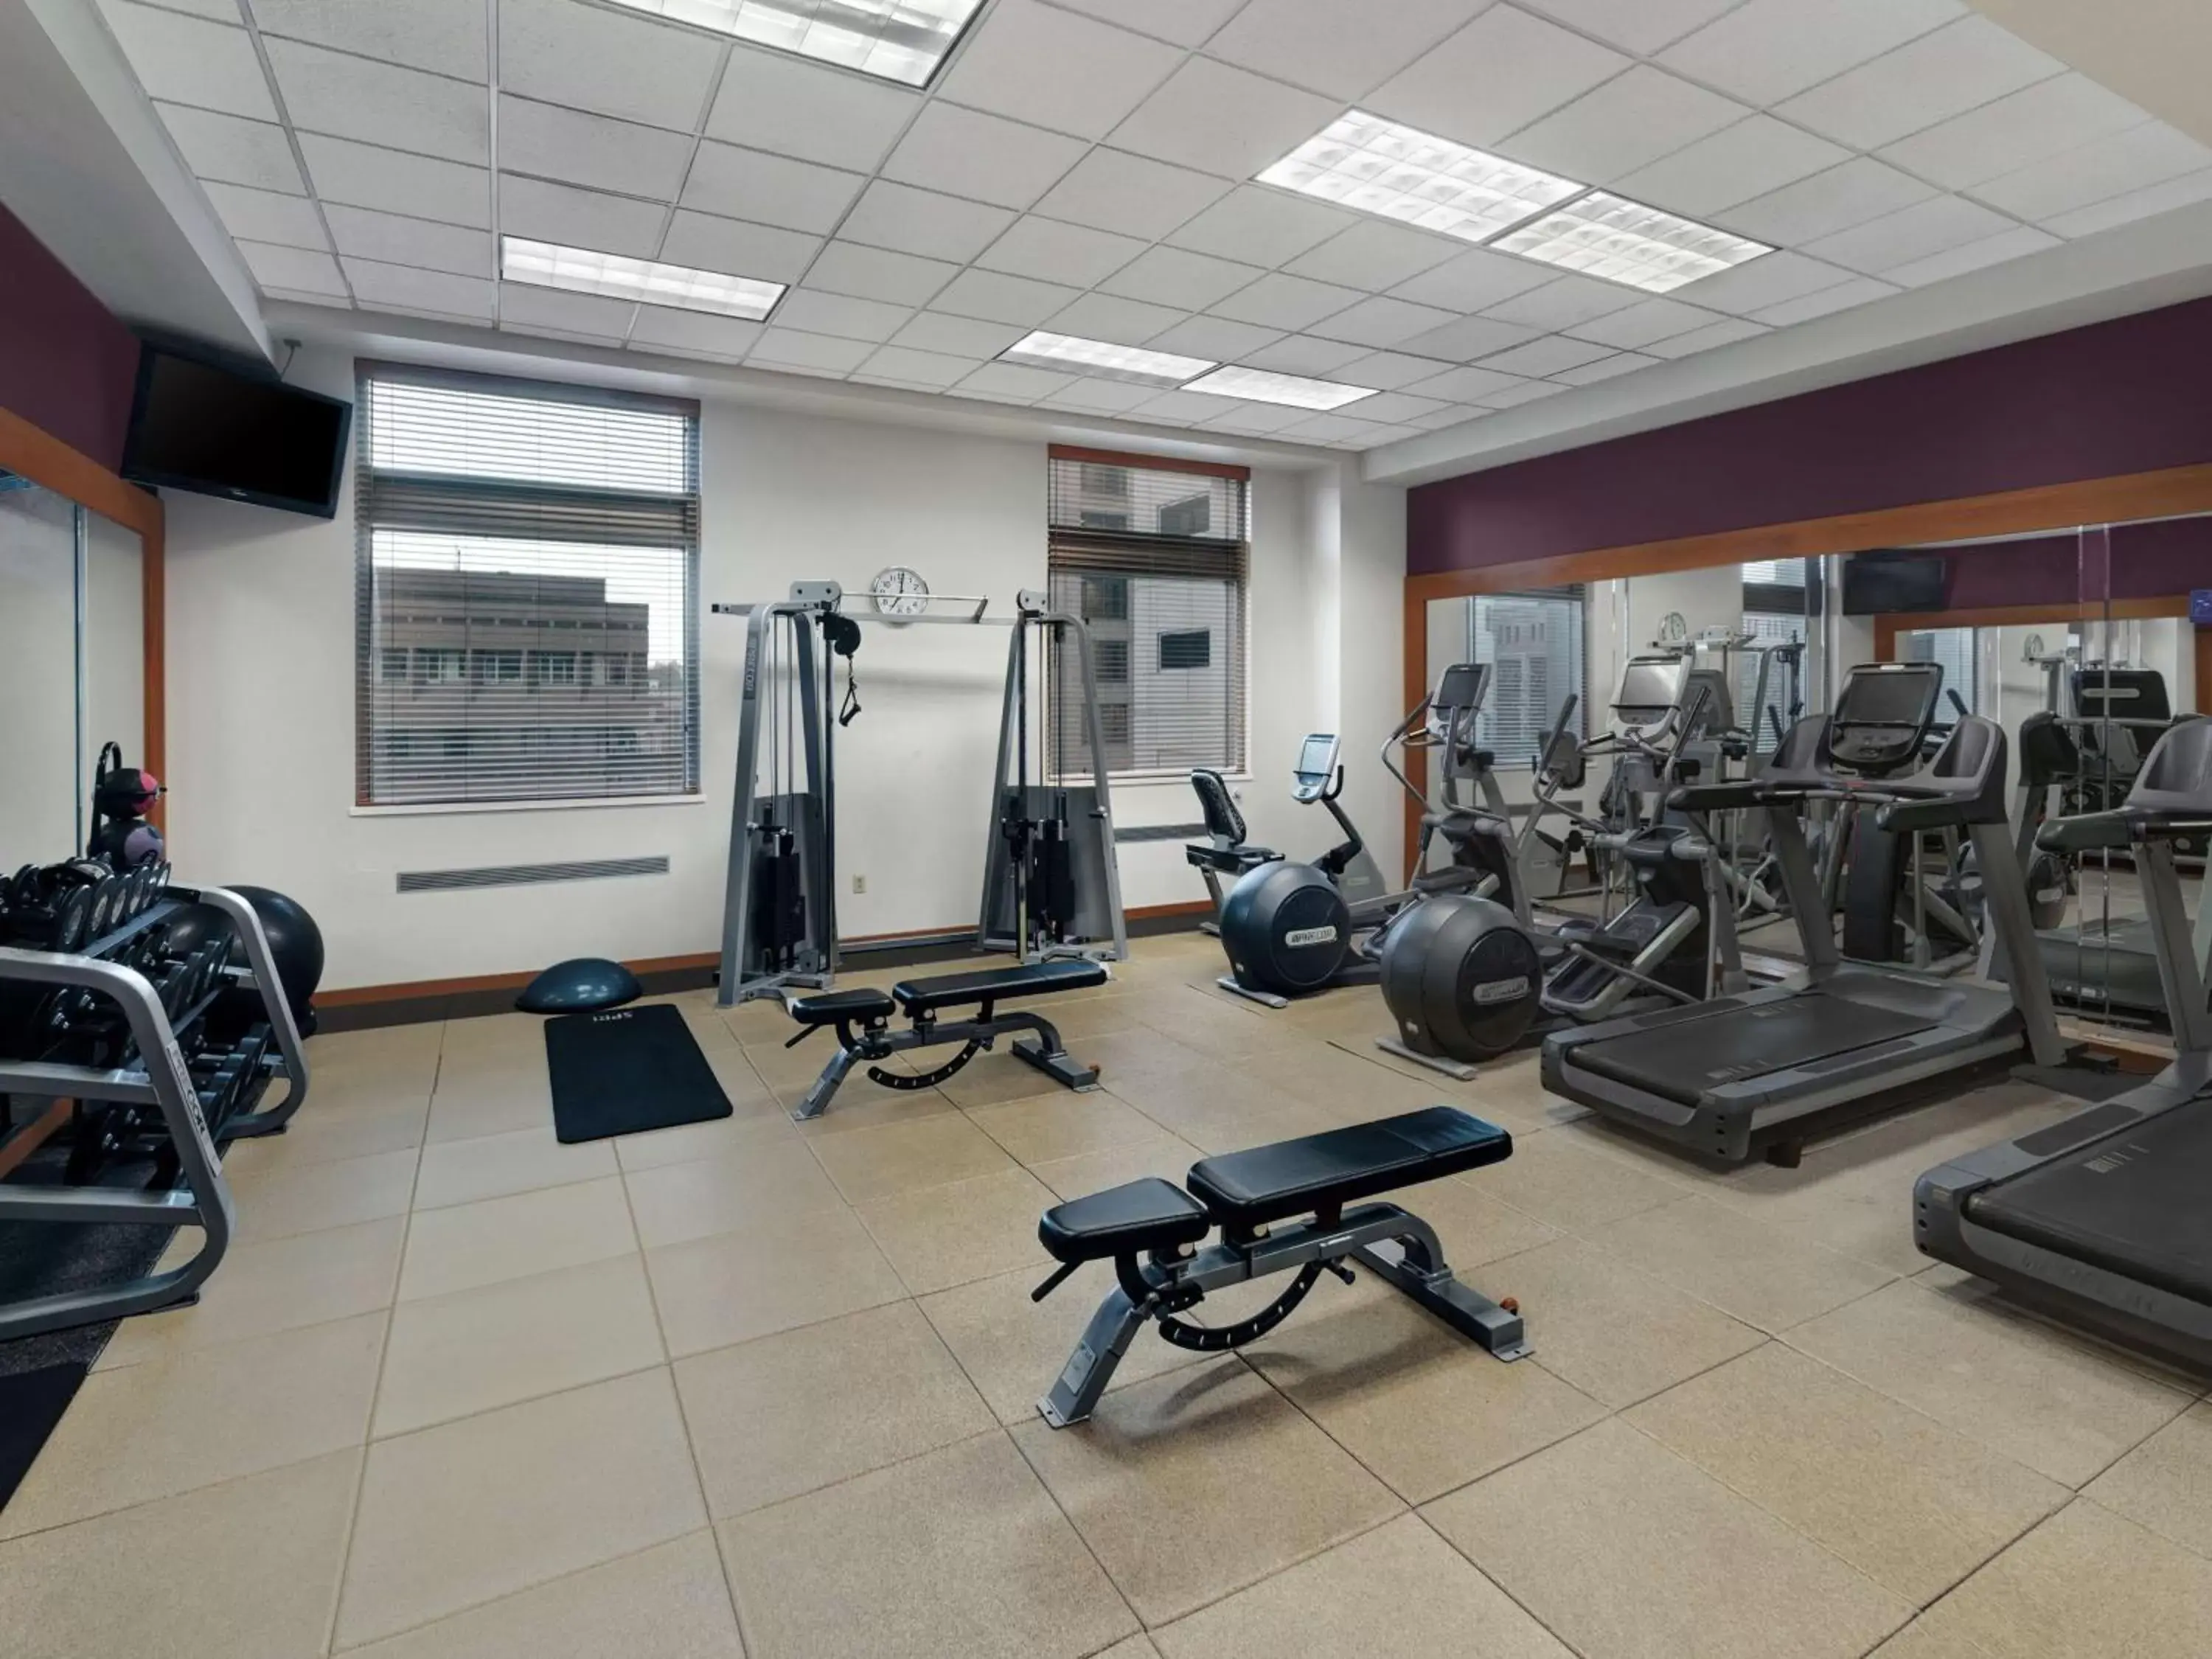 Fitness centre/facilities, Fitness Center/Facilities in Hilton Harrisburg near Hershey Park